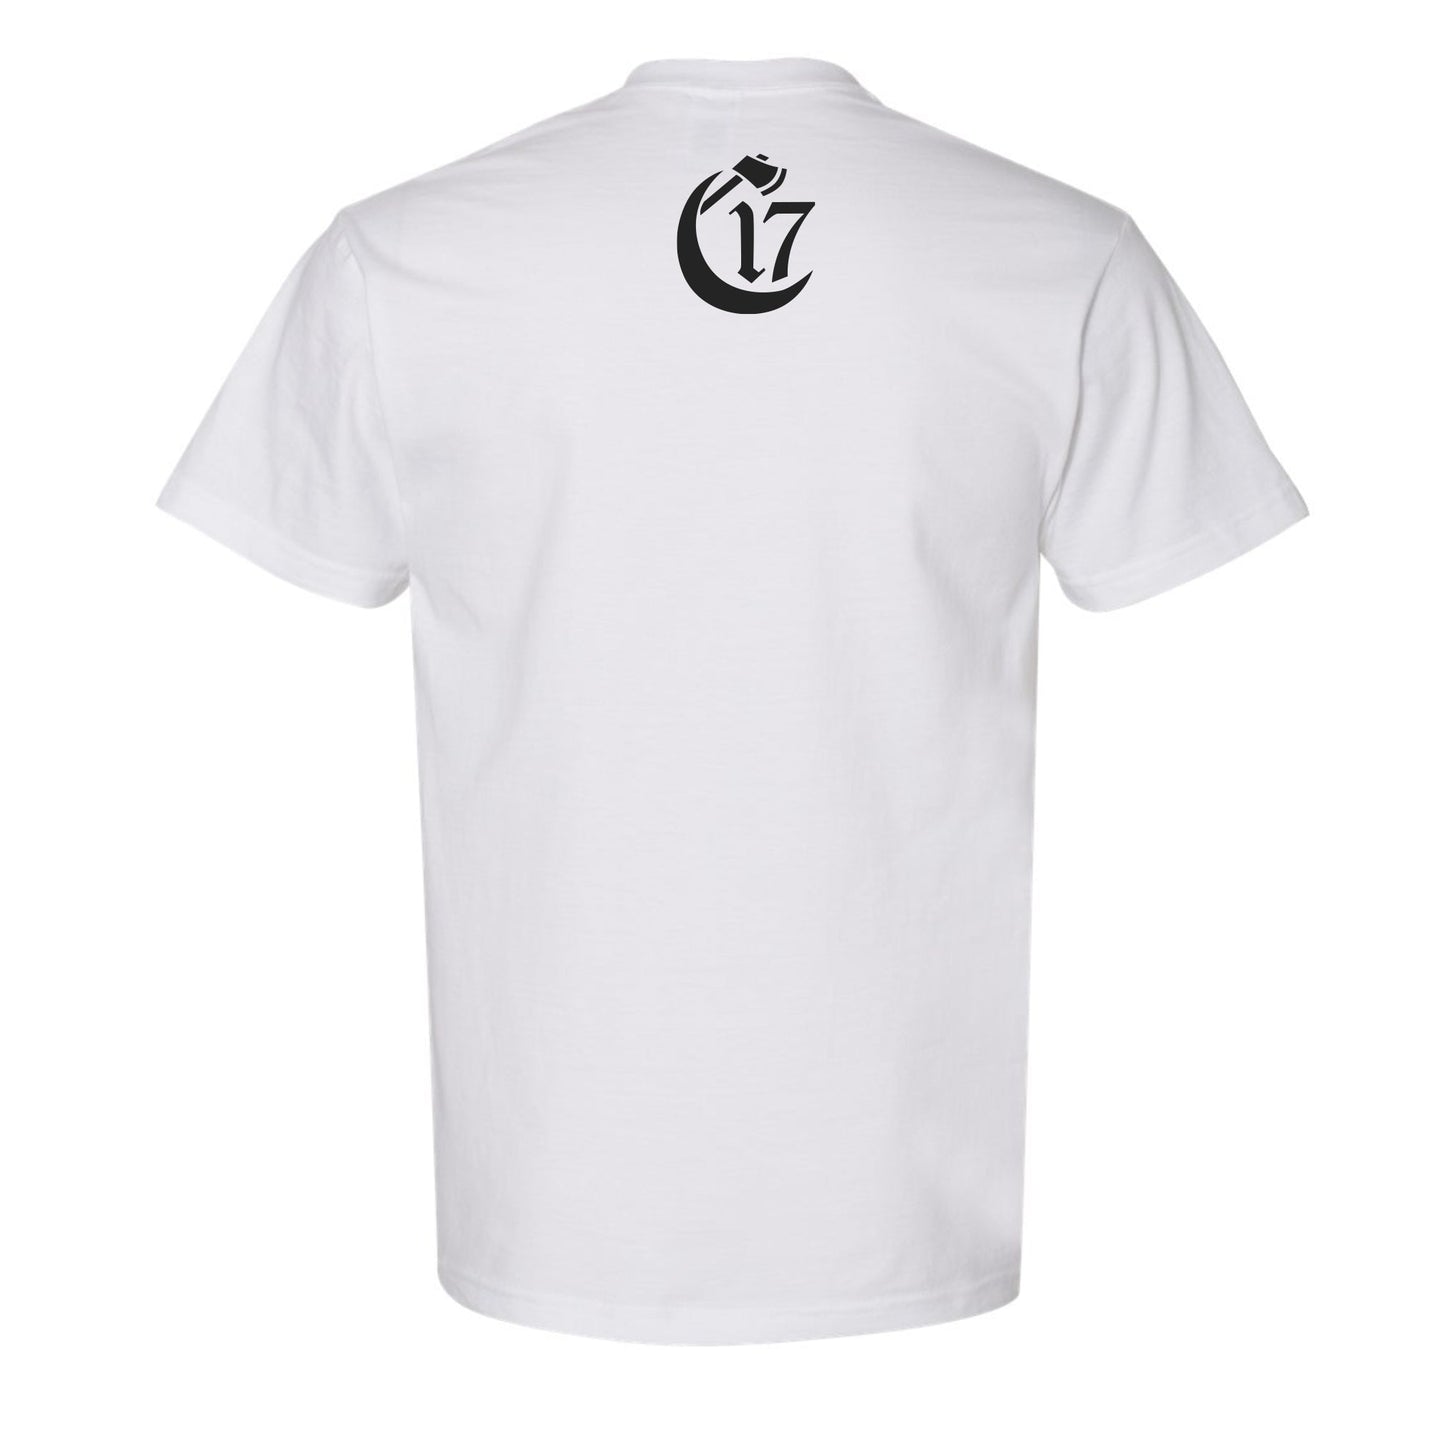 Chapter 17 - C17 T-shirt - 2023 - White